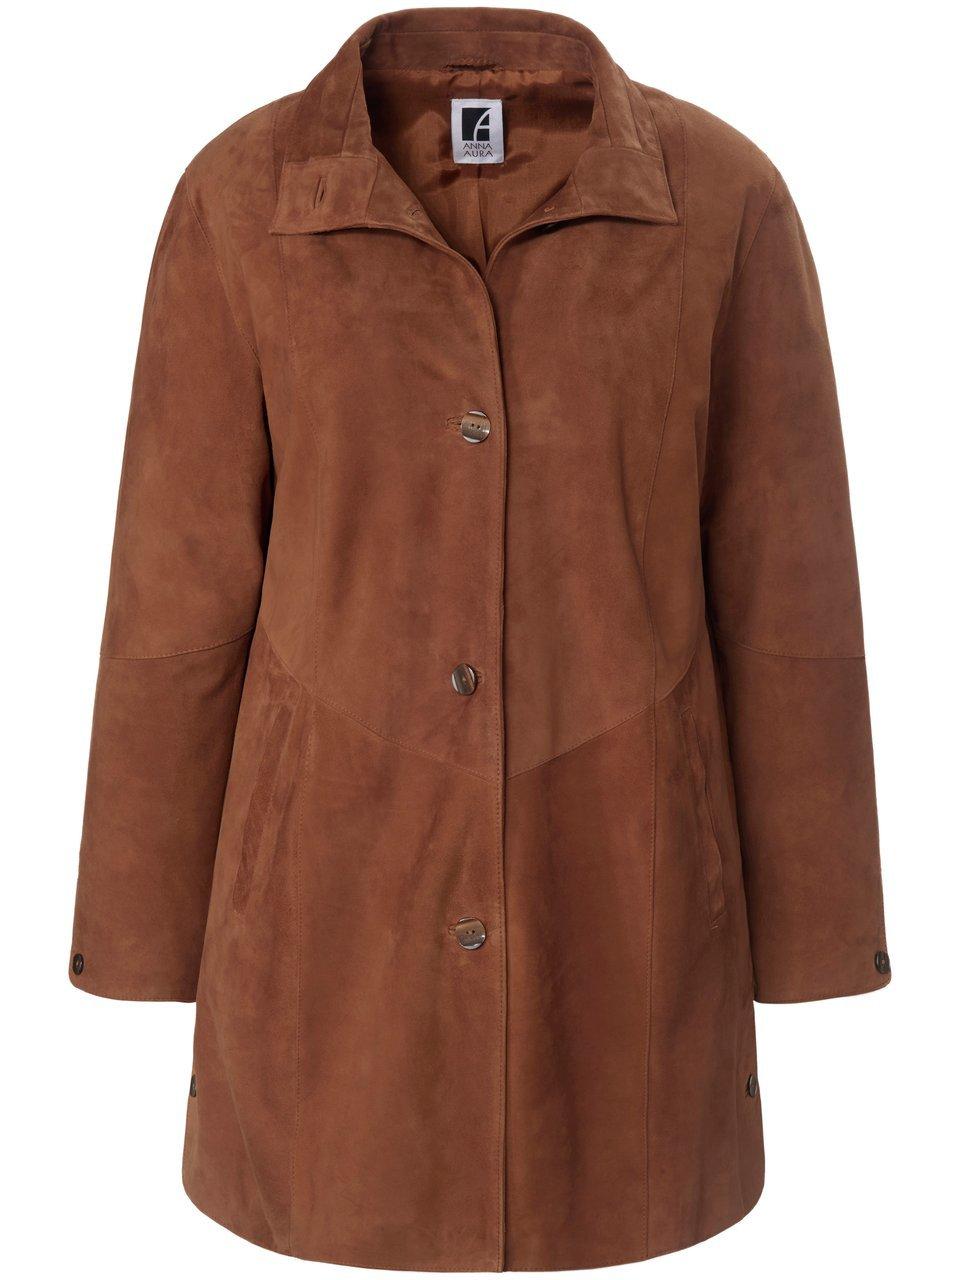 Le manteau court en cuir ultra-souple  Anna Aura marron